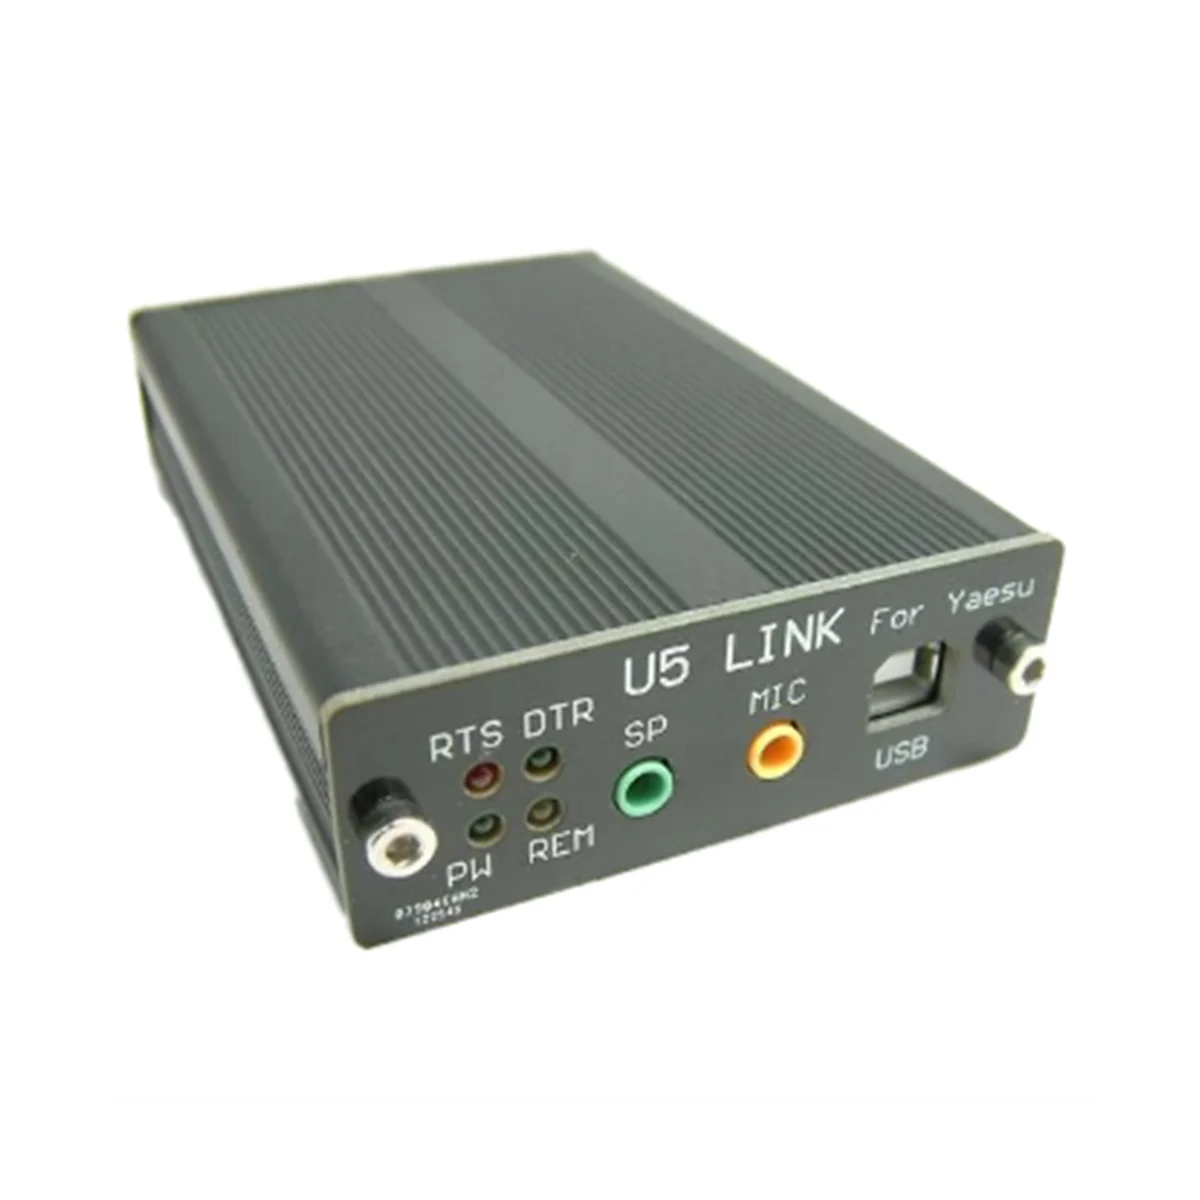 

For YAESU FT-891 FT-817ND FT-857D FT-897D Dedicated Radio Connector U5 LINK